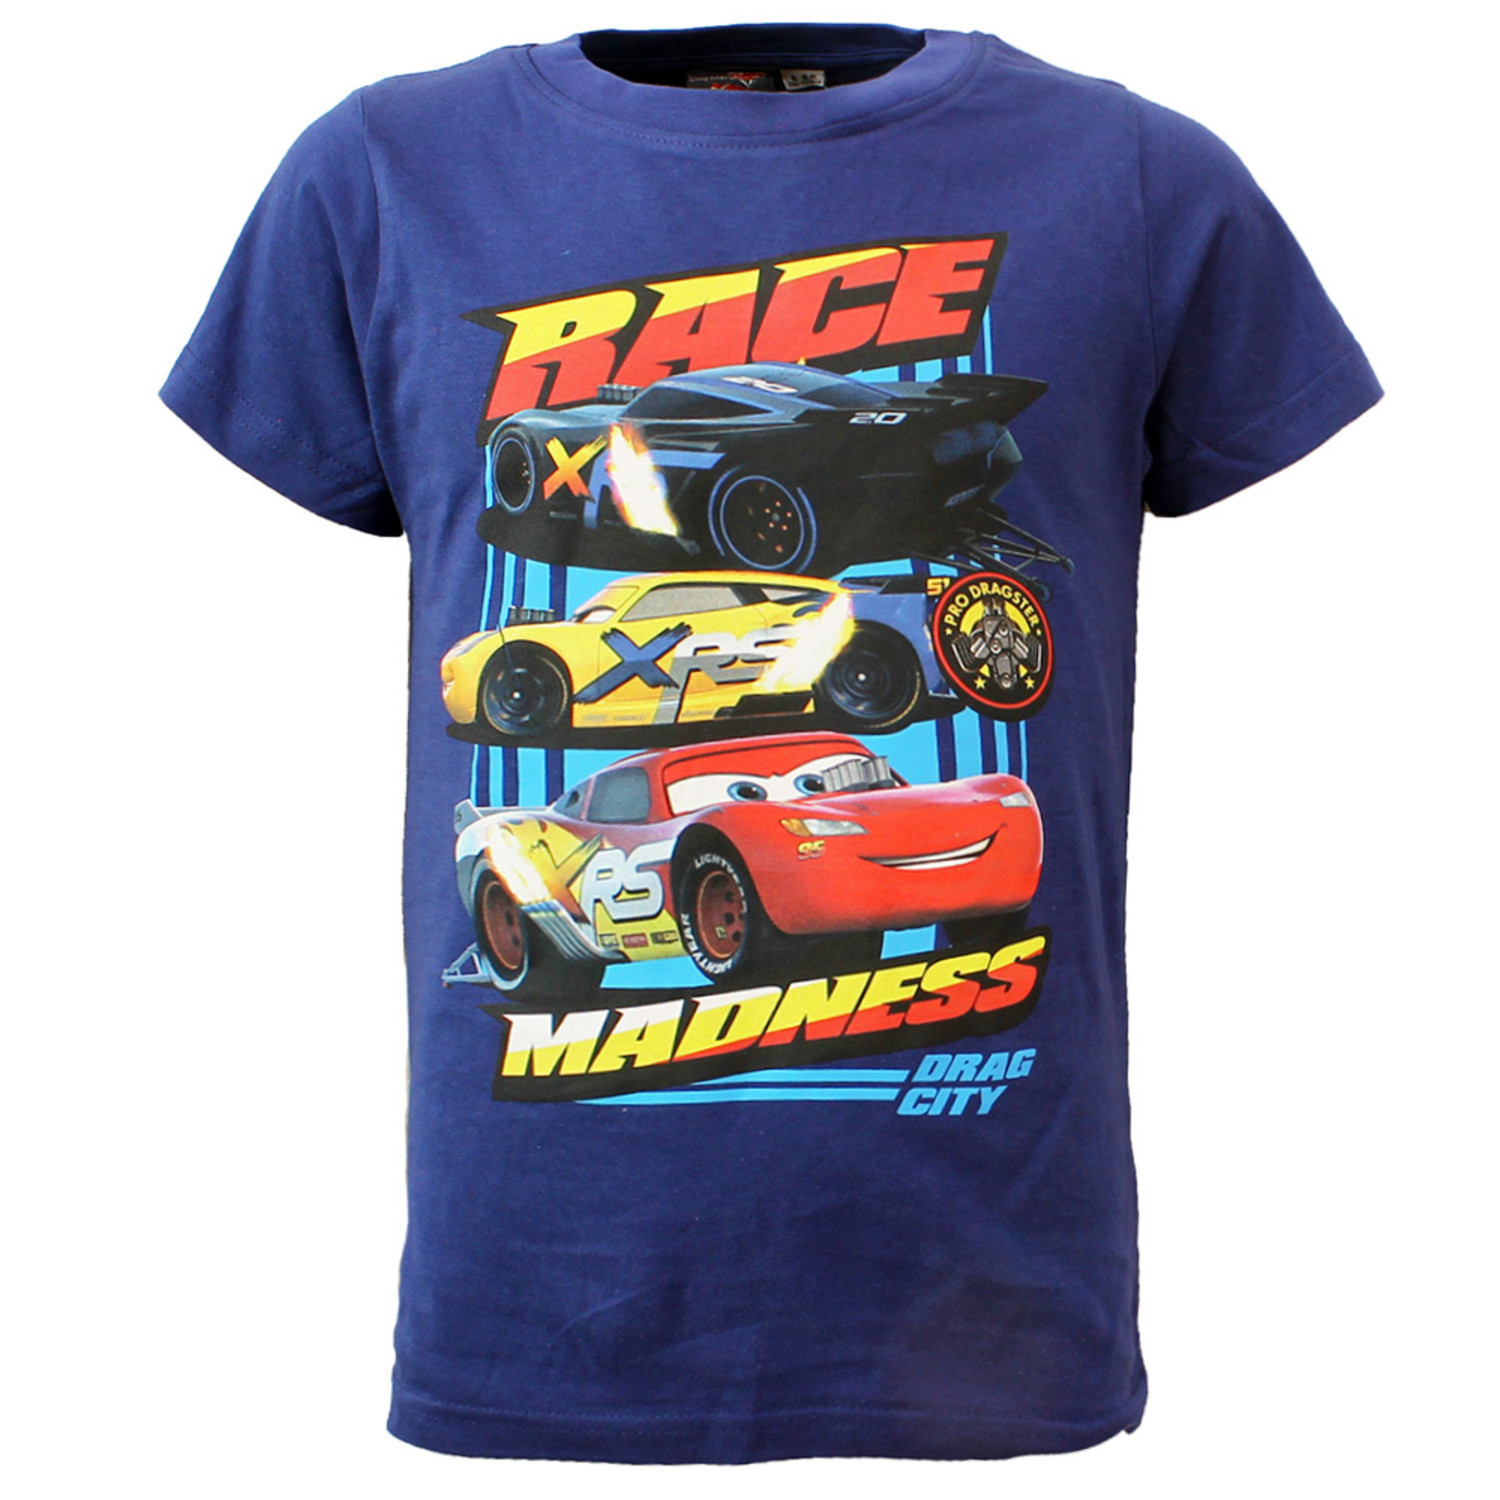 Kip George Hanbury Retentie Disney Cars Race Madness Kinder T-Shirt Blauw - Officiële Merchandise -  Popmerch.com